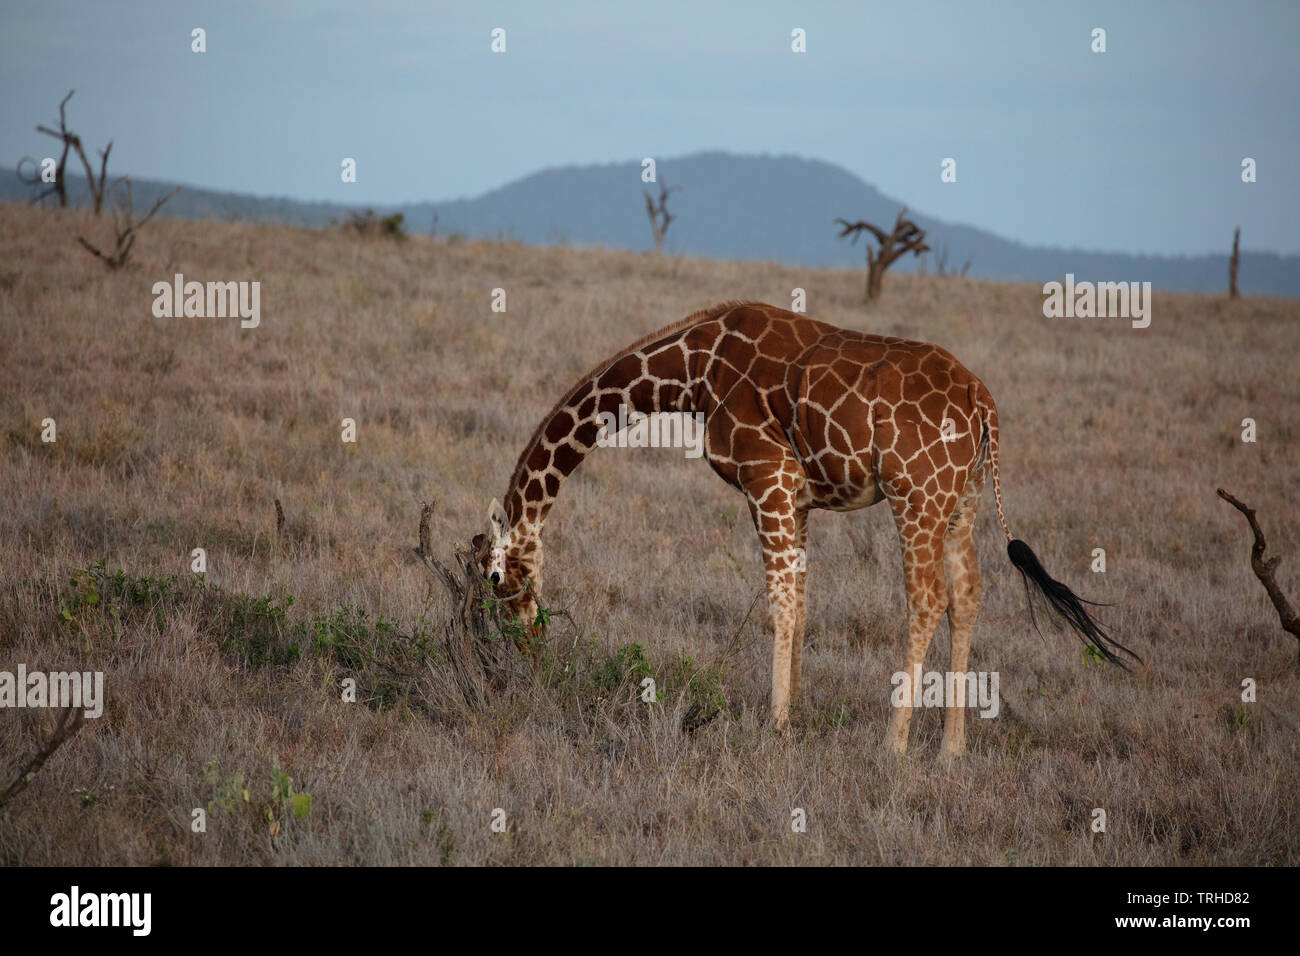 Somali Giraffe, Reticulated, Lewa Game Sanctuary, N. Kenya, E. Africa,  by Dembinsky Photo Associates Stock Photo